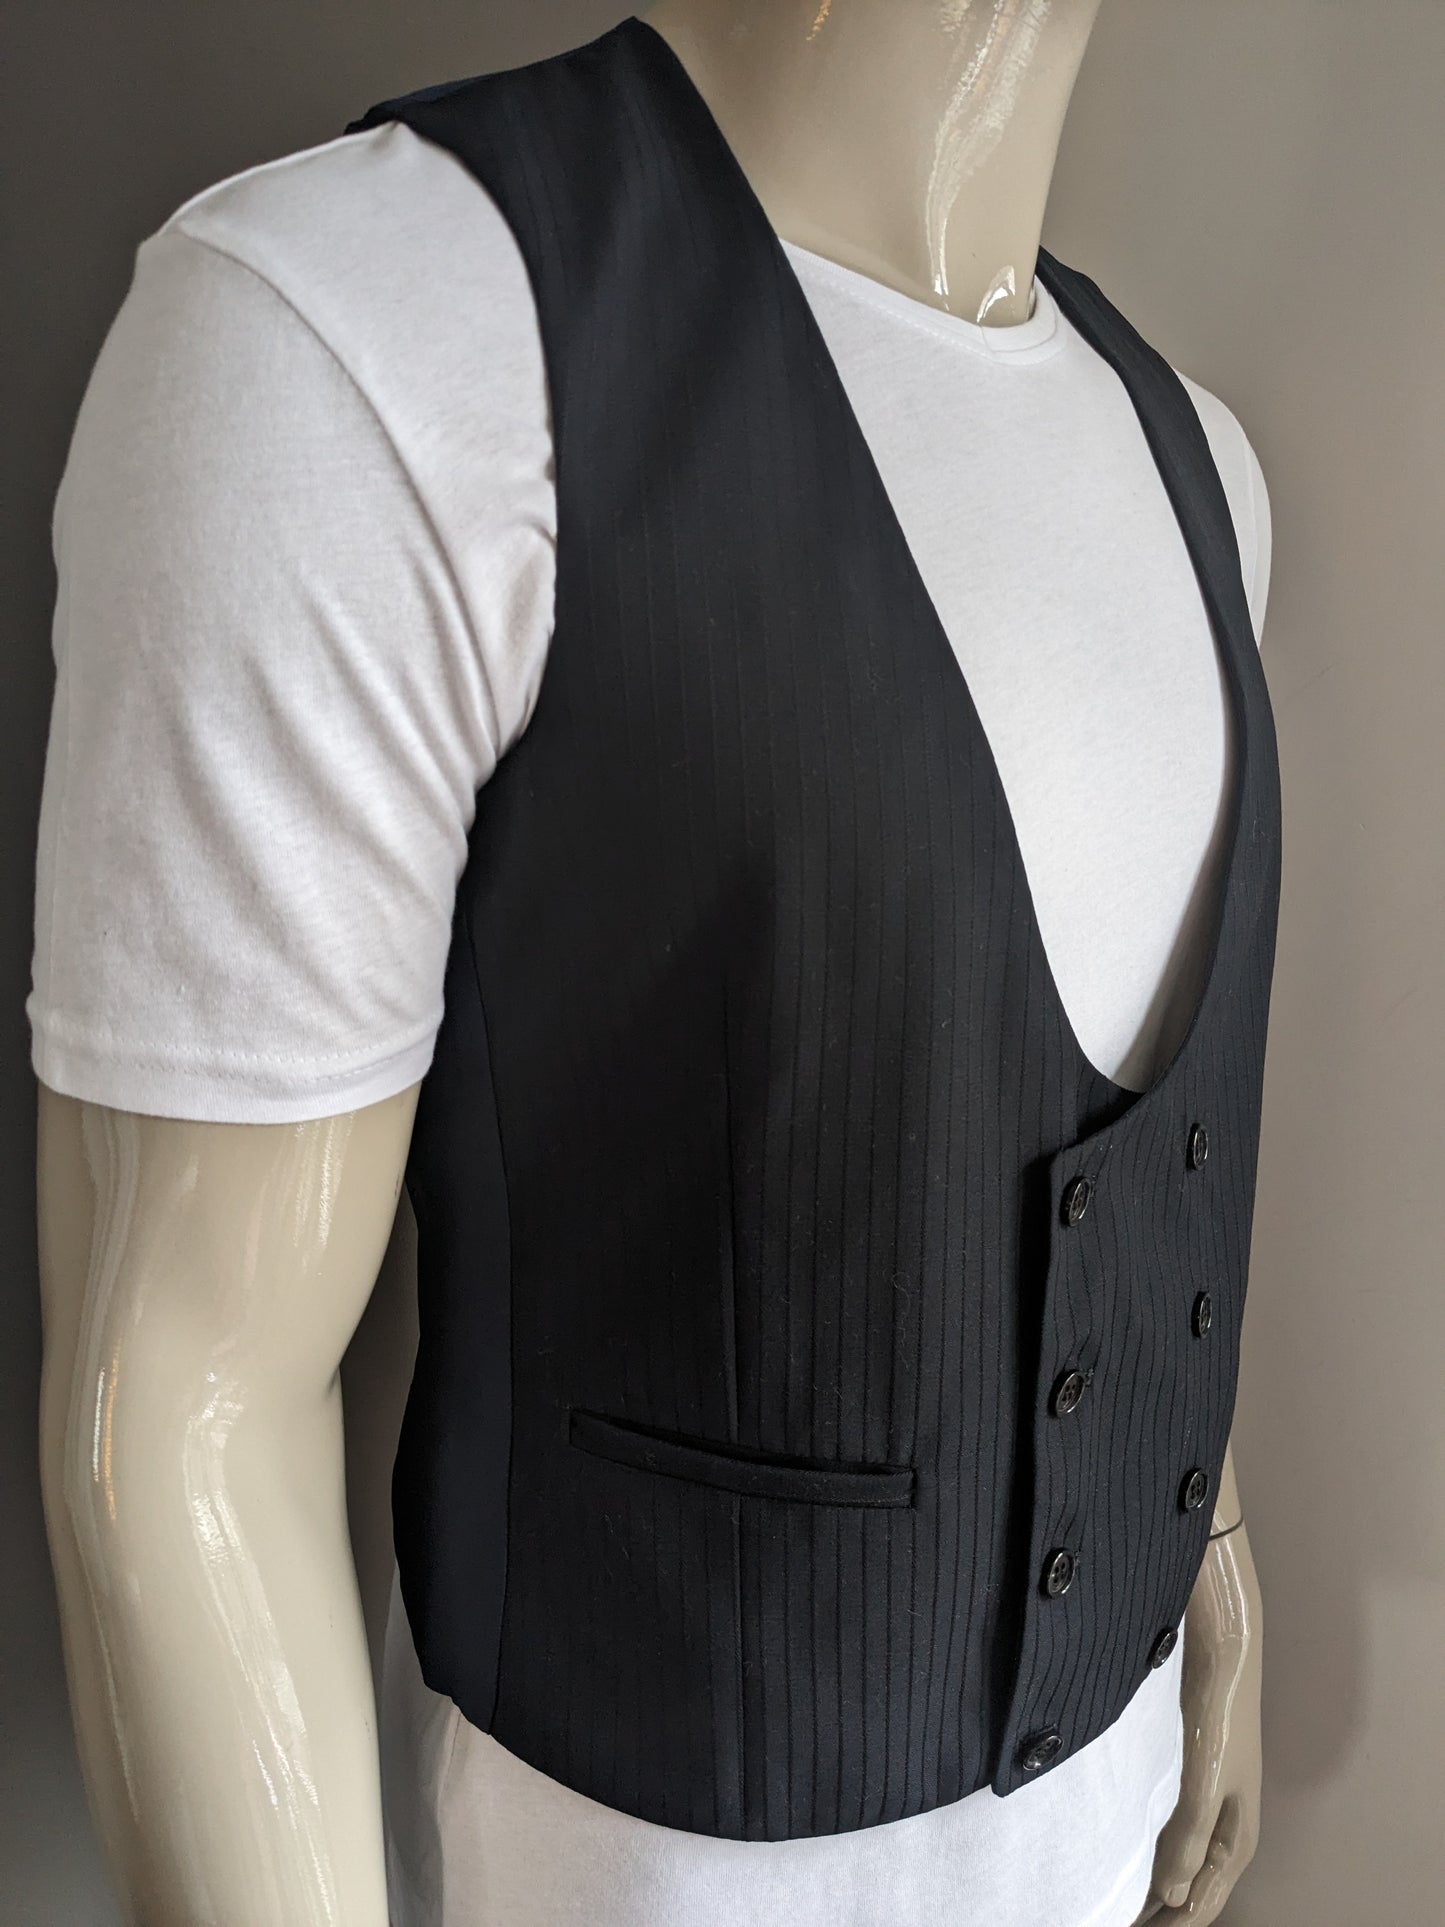 Double Breasted waistcoat. Black light shiny striped. Size M.